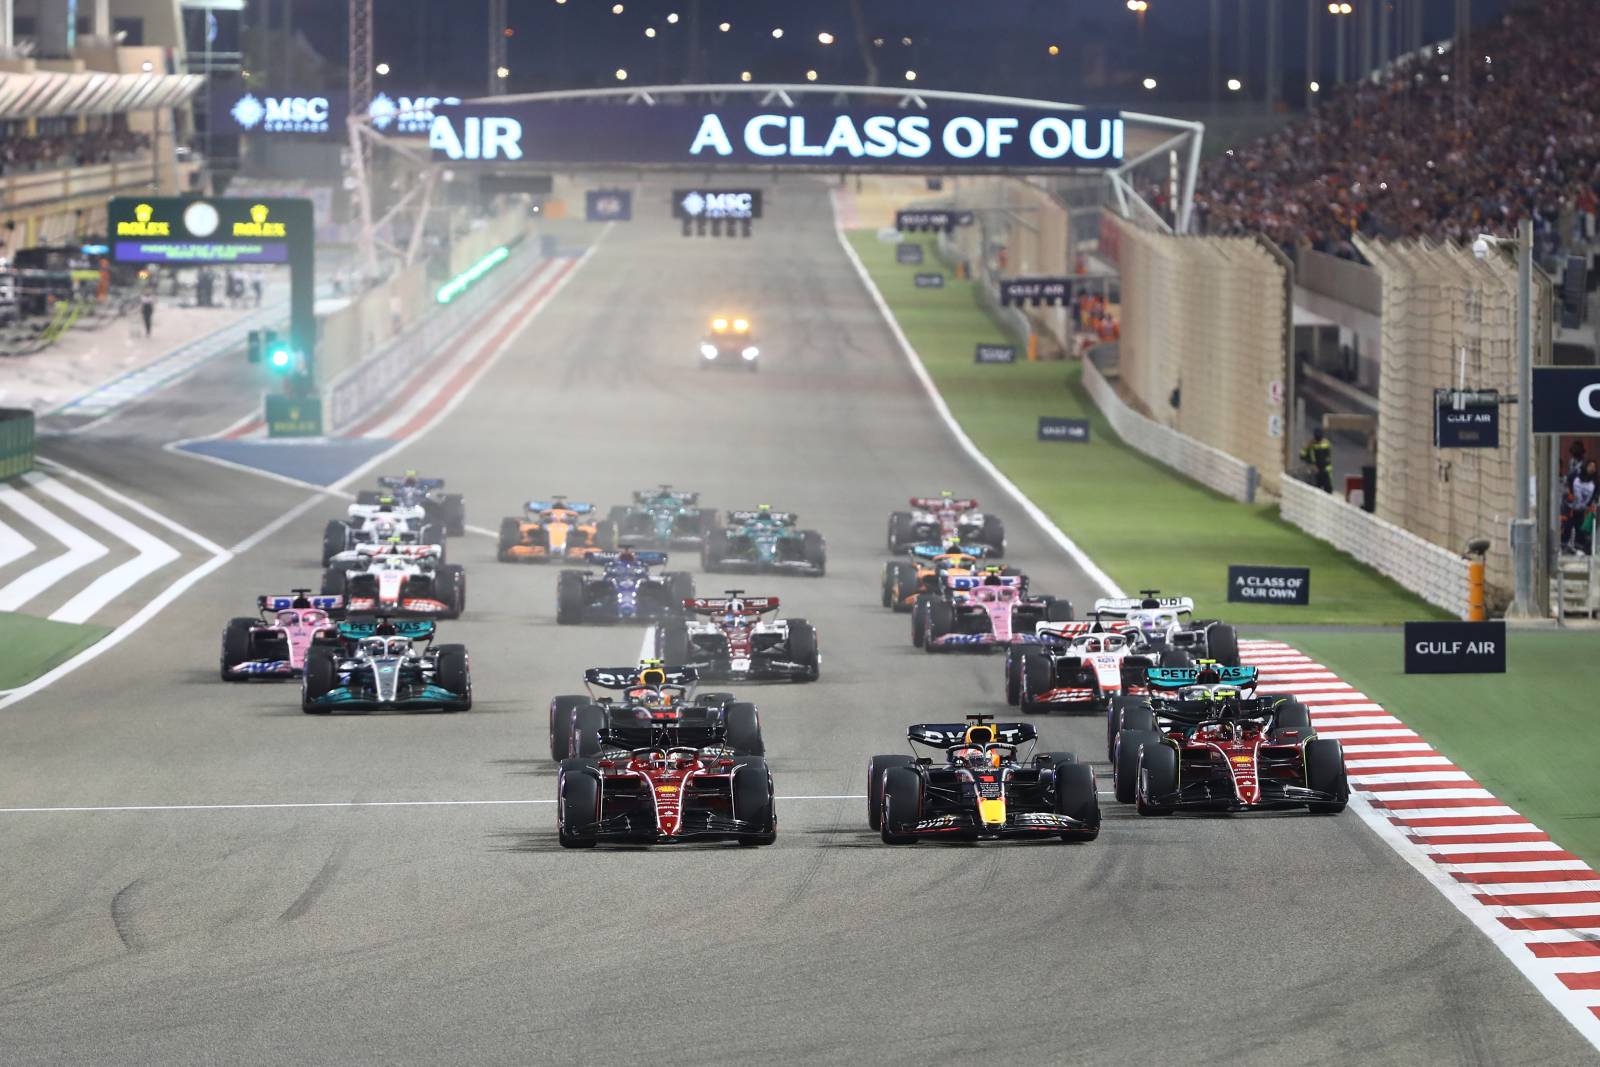 F1s new era The five best races of the 2022 season so far